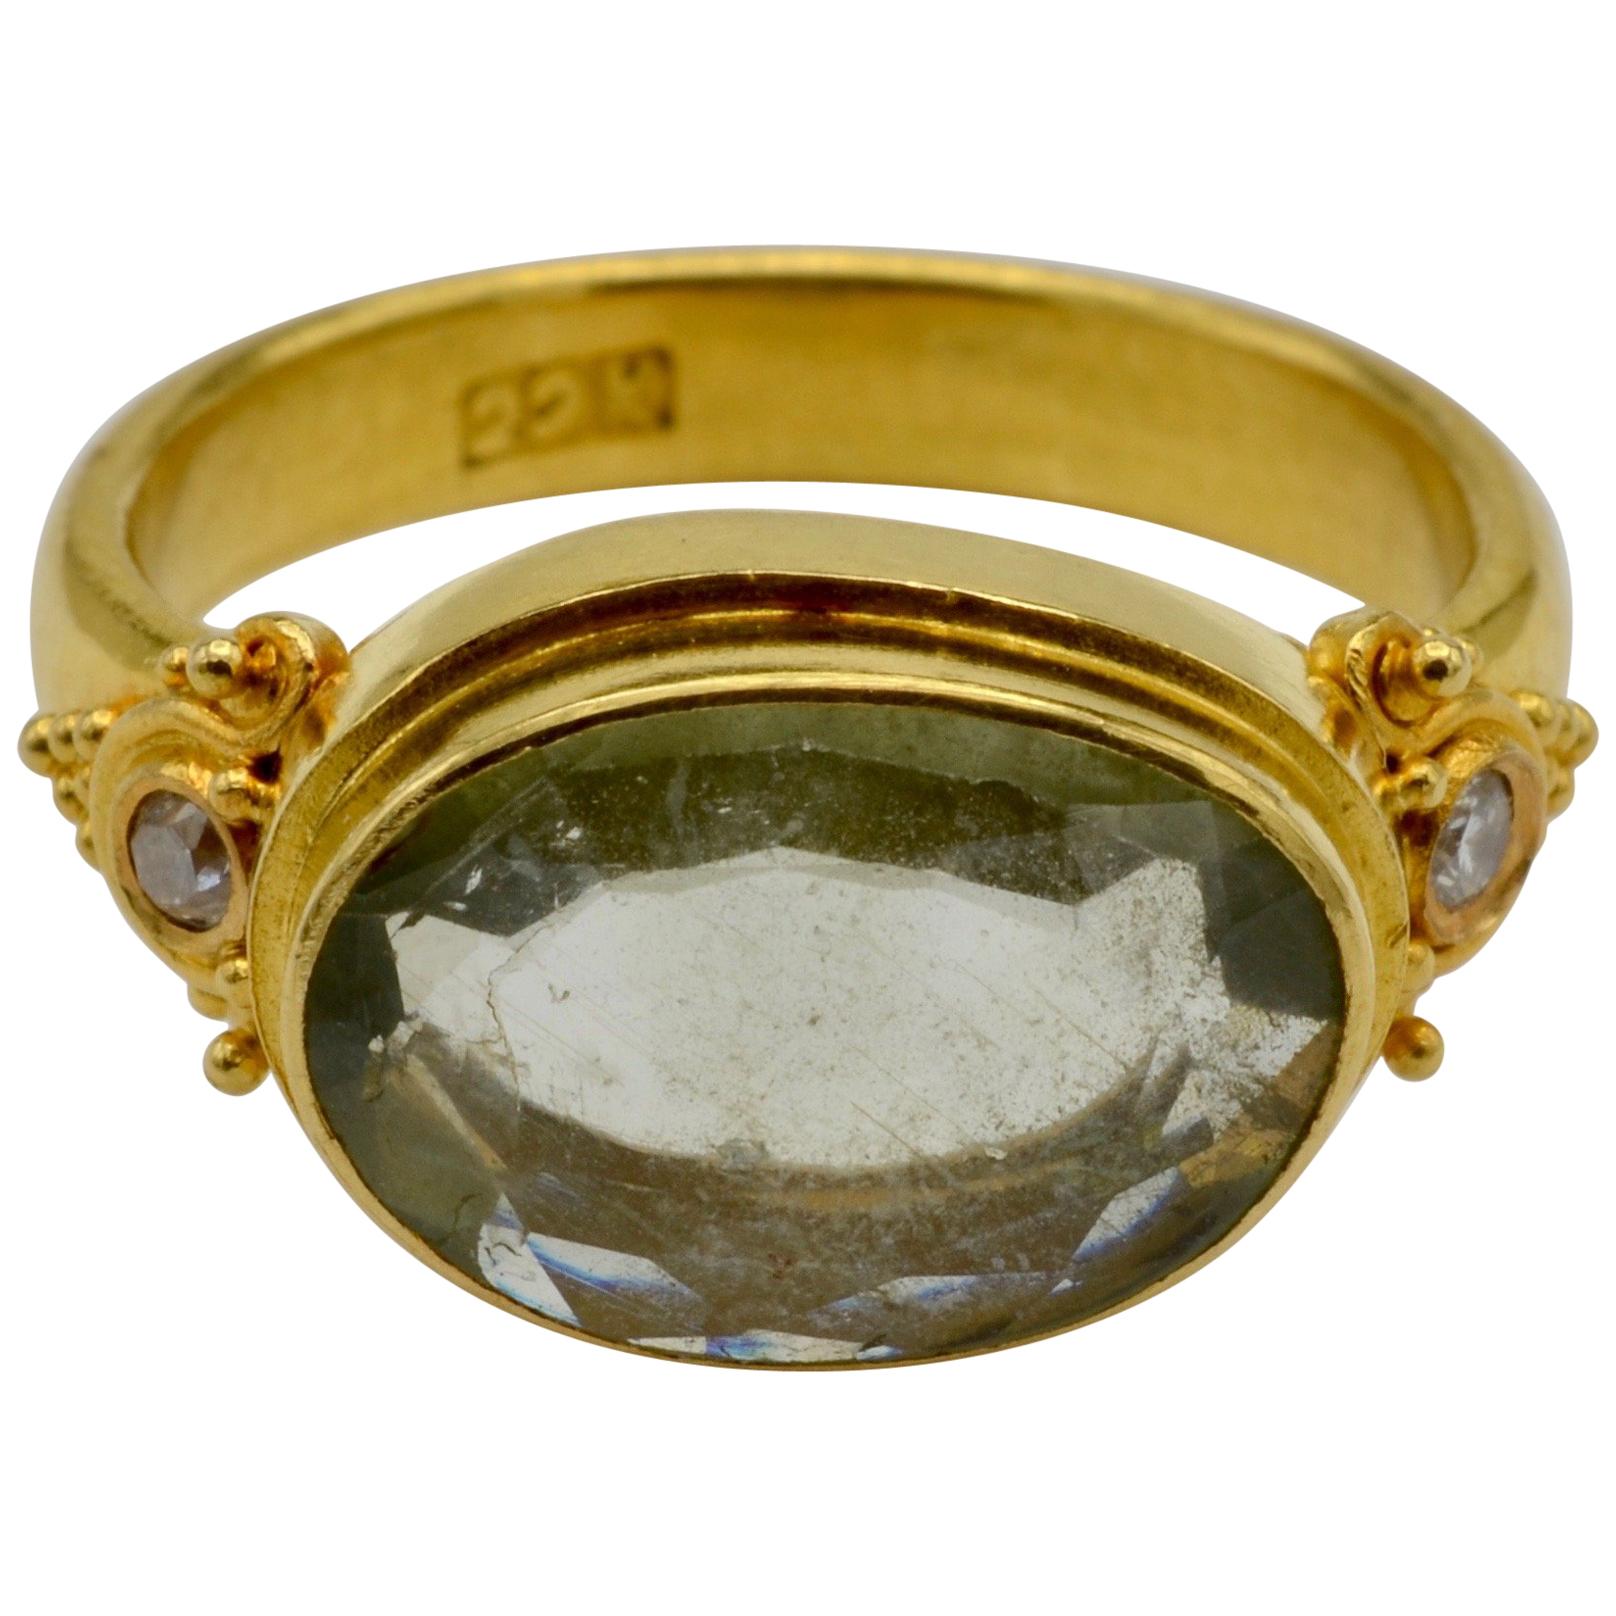 Aquamarine and Diamonds Set in 22 Karat Gold Granulated Ring